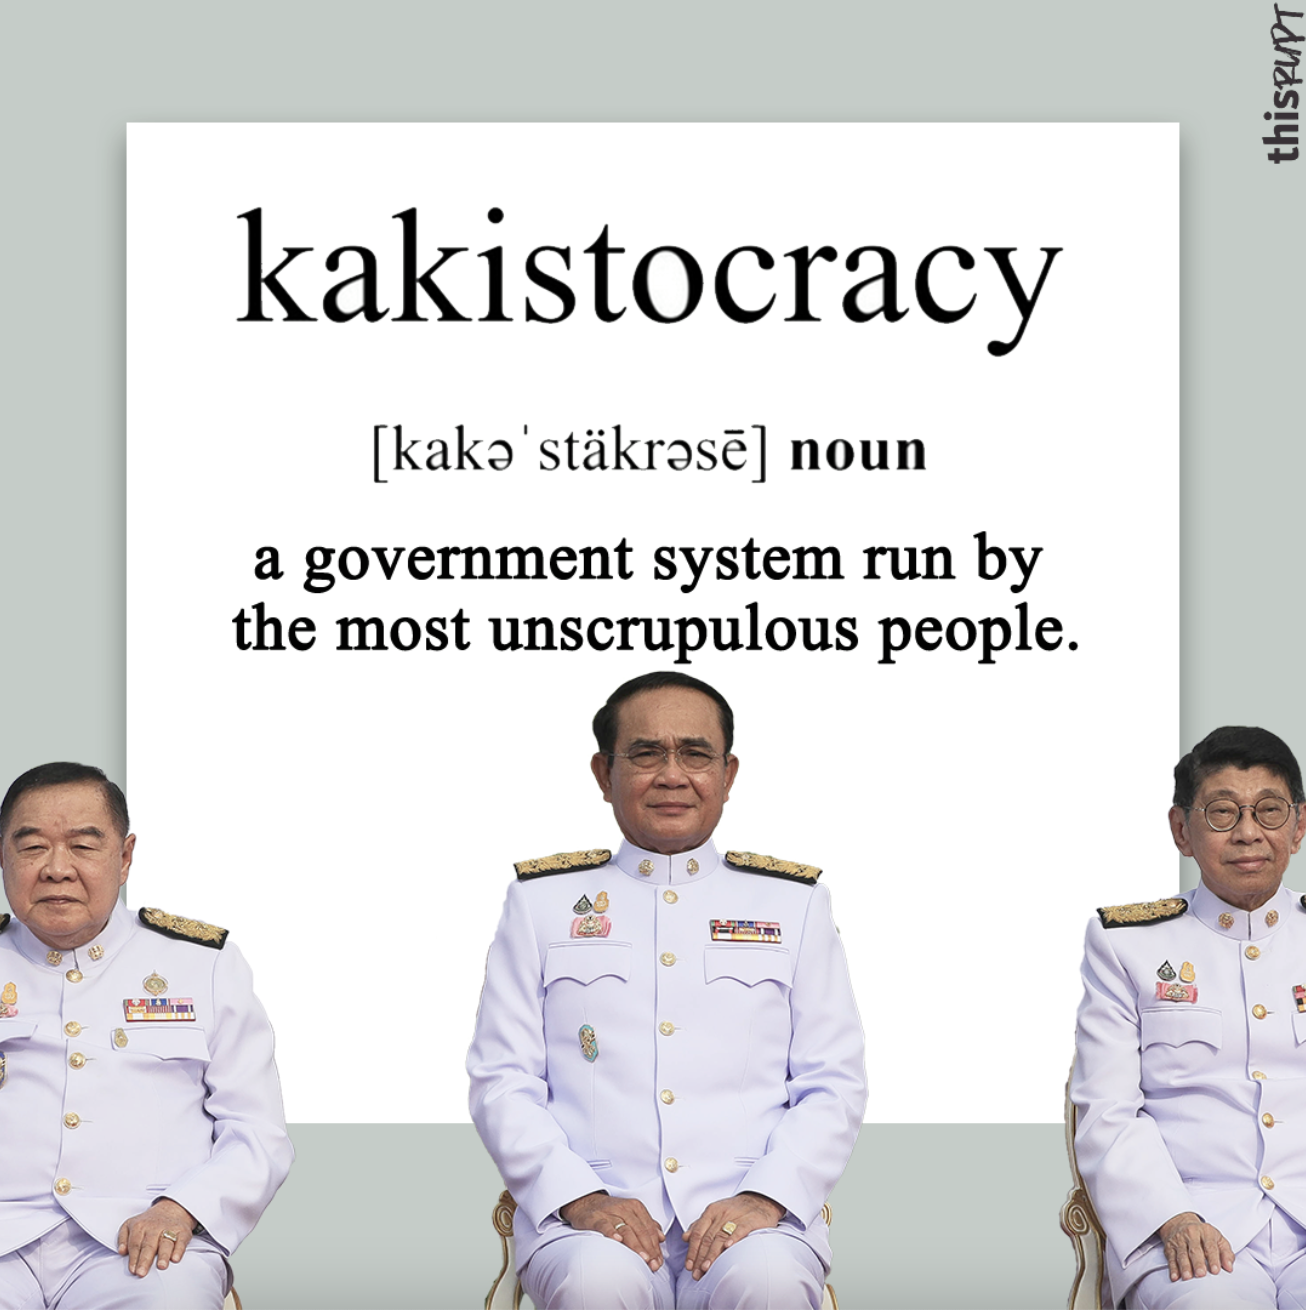 The Kingdom of Kakistocracy